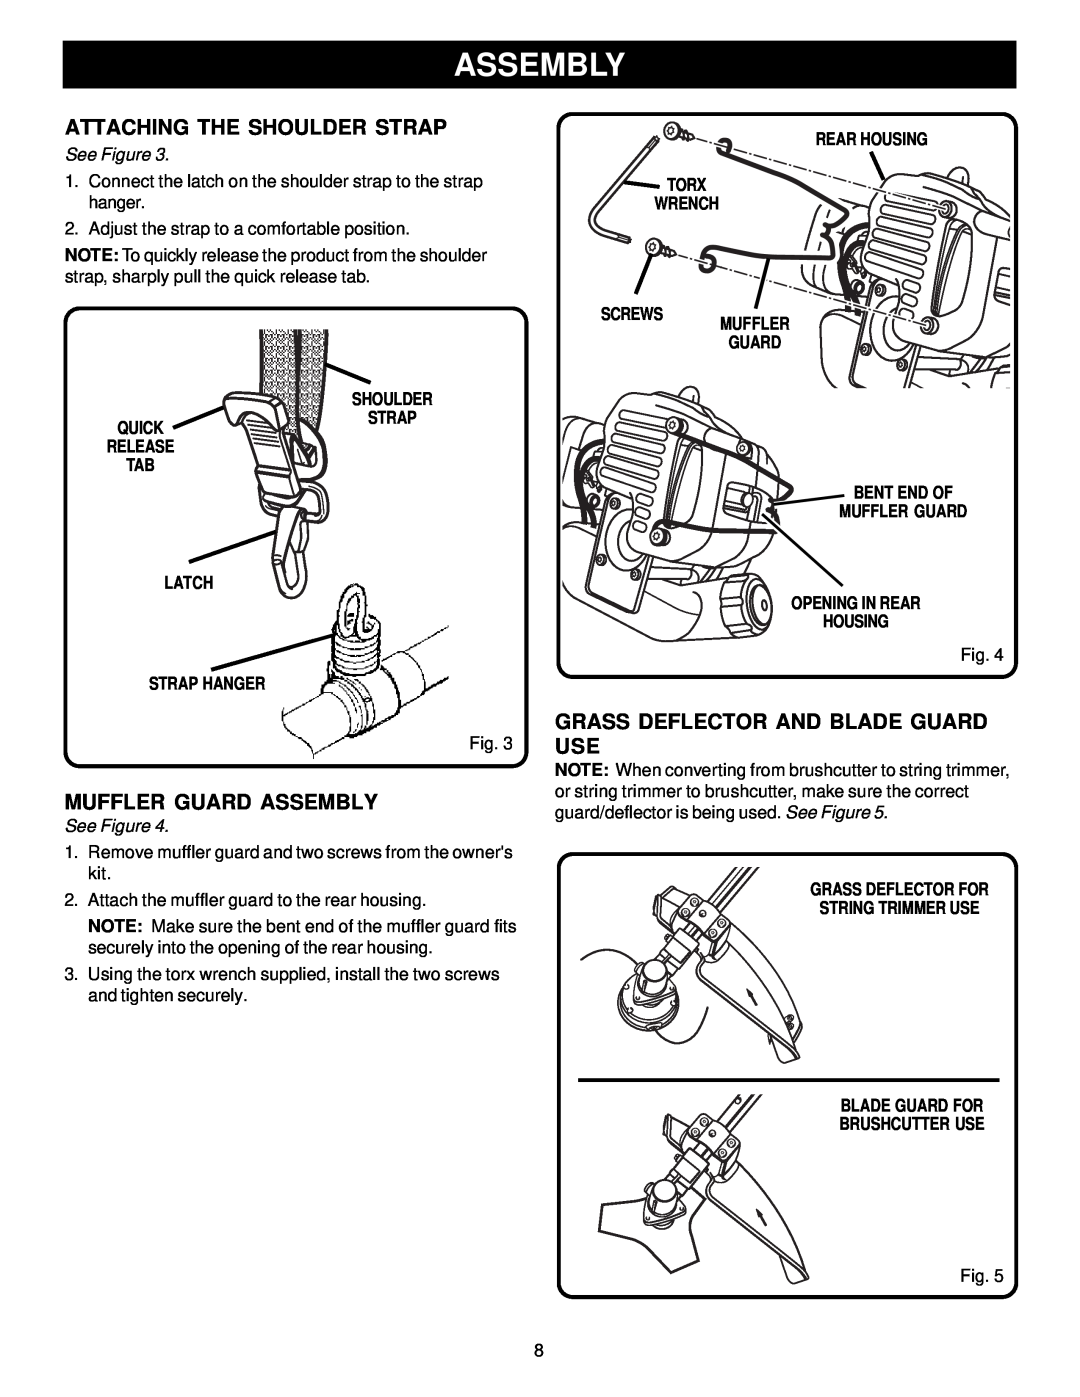 Ryobi Outdoor PBC3046B, RY70107 Attaching The Shoulder Strap, Muffler Guard Assembly, Grass Deflector And Blade Guard Use 